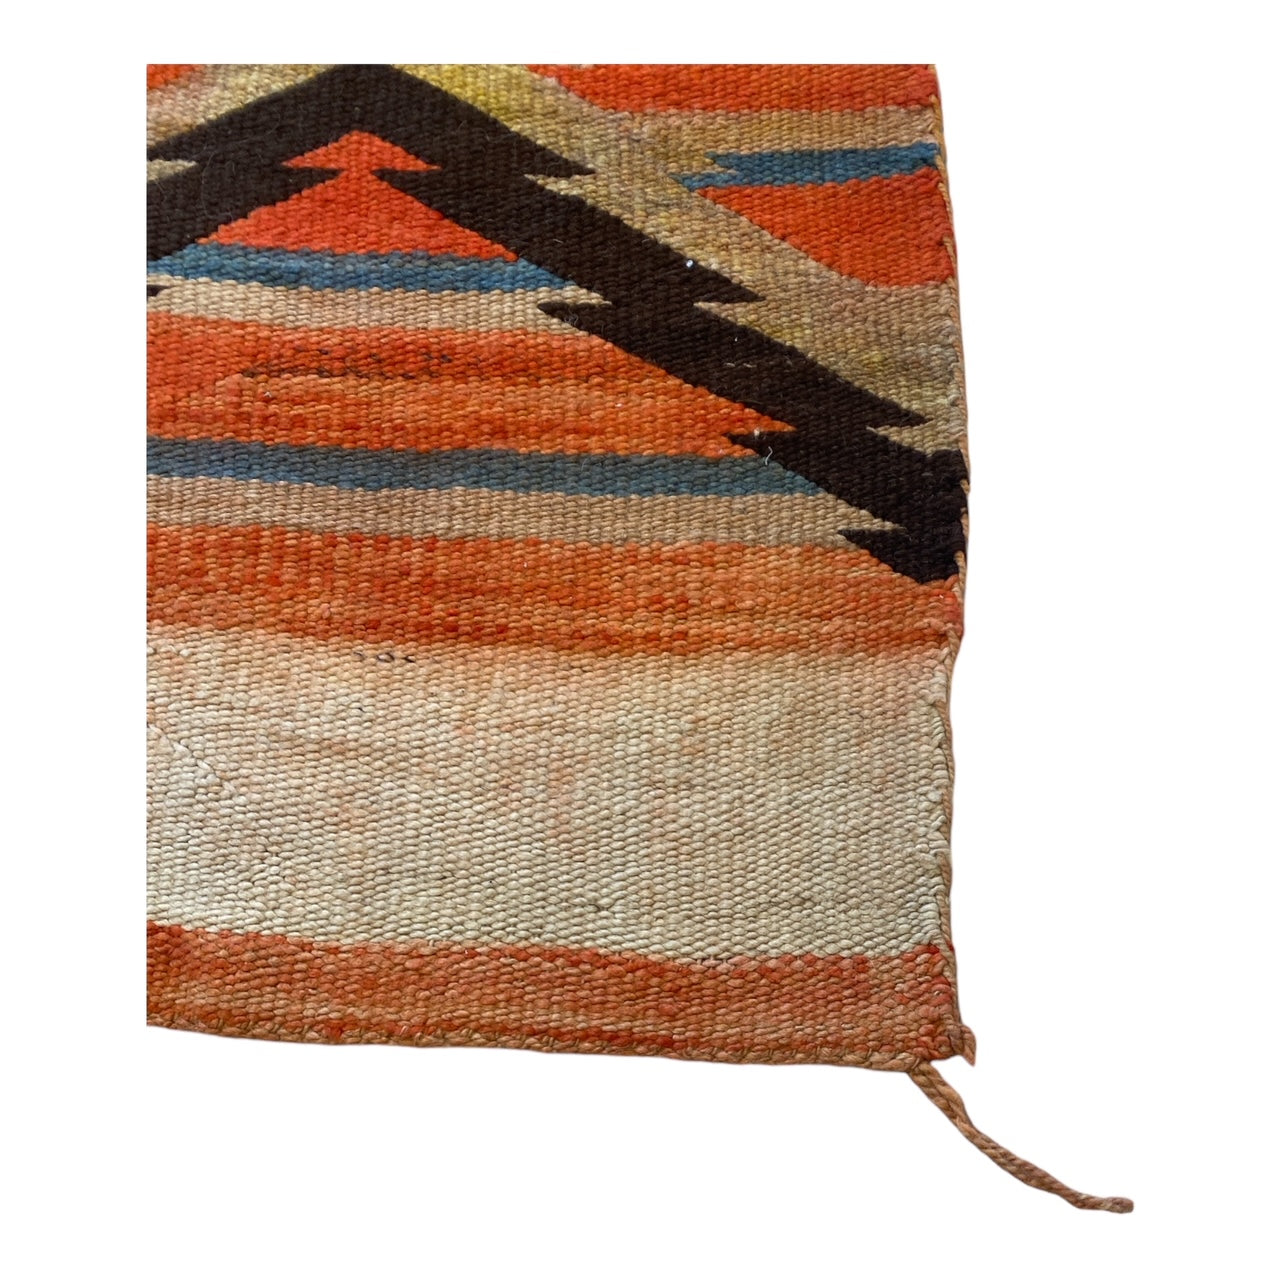 antique navajo wearing blanket, telluride, navajo weaving, rug, native american arts antique navajo wearing blanket, telluride, navajo weaving, rug, native american arts, navajo rug for sale